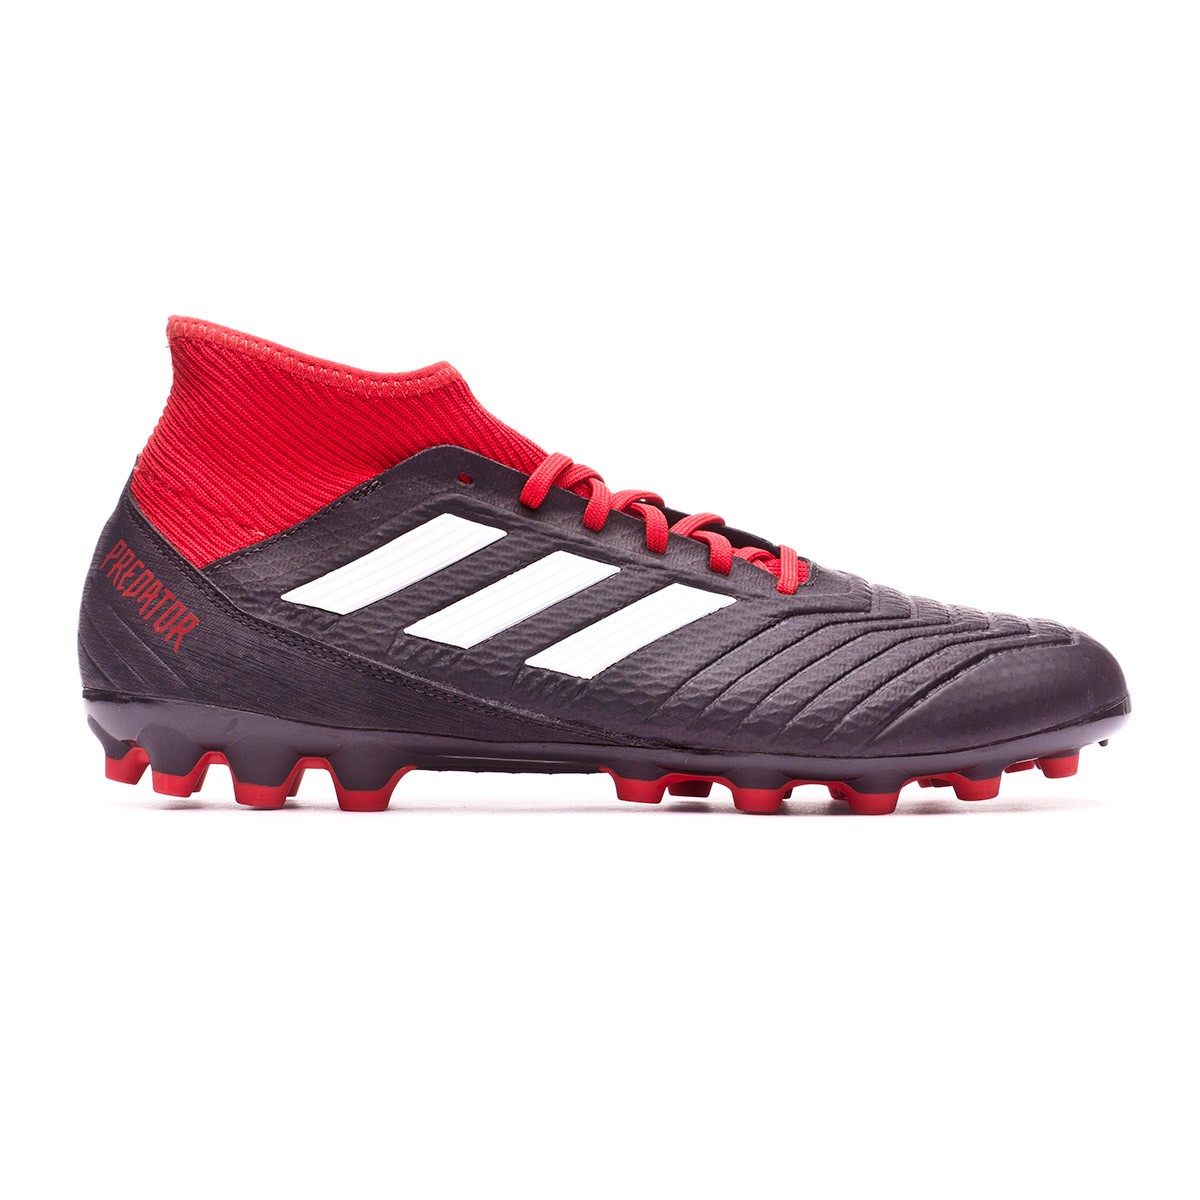 Bota de fútbol adidas Predator 18.3 AG Core black-White-Red - Tienda de fútbol  Fútbol Emotion